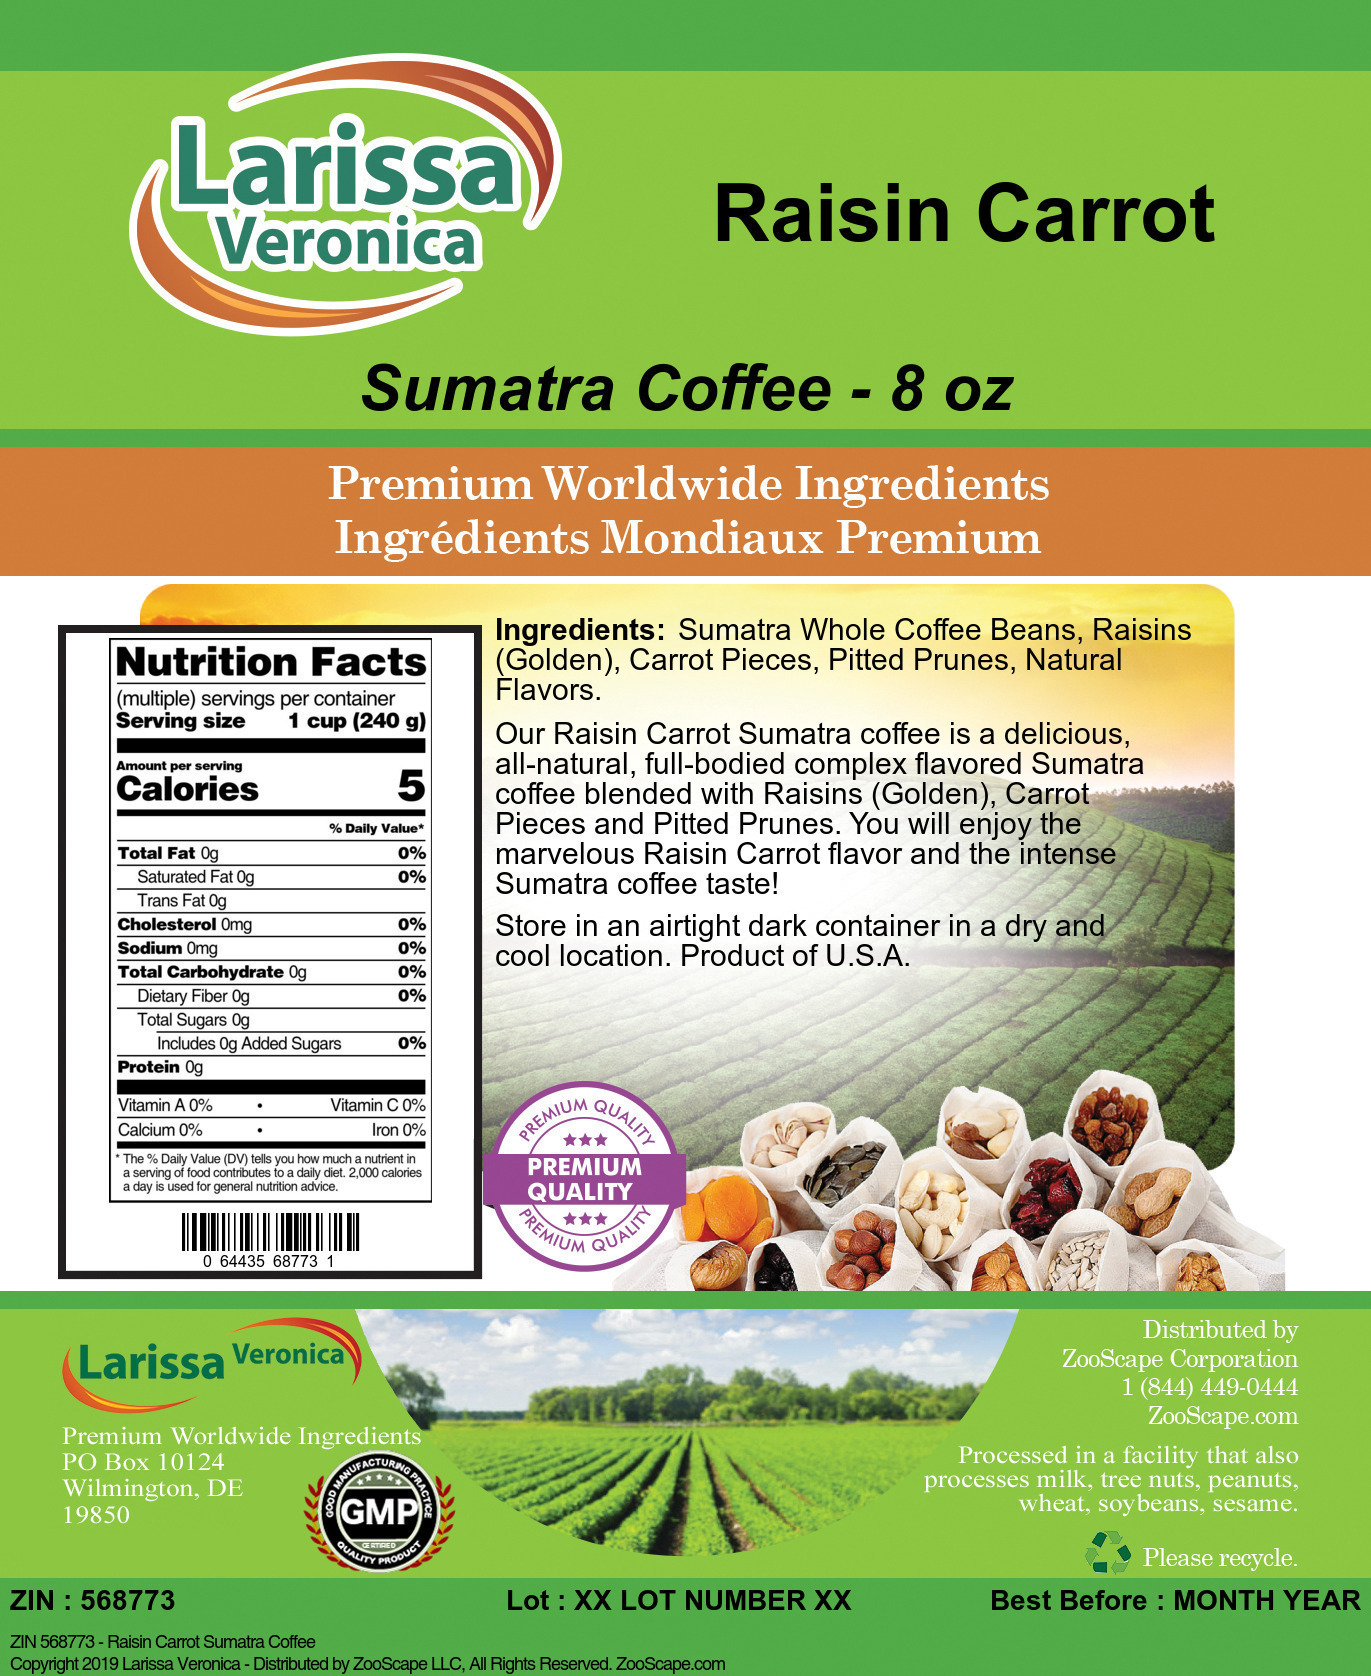 Raisin Carrot Sumatra Coffee - Label